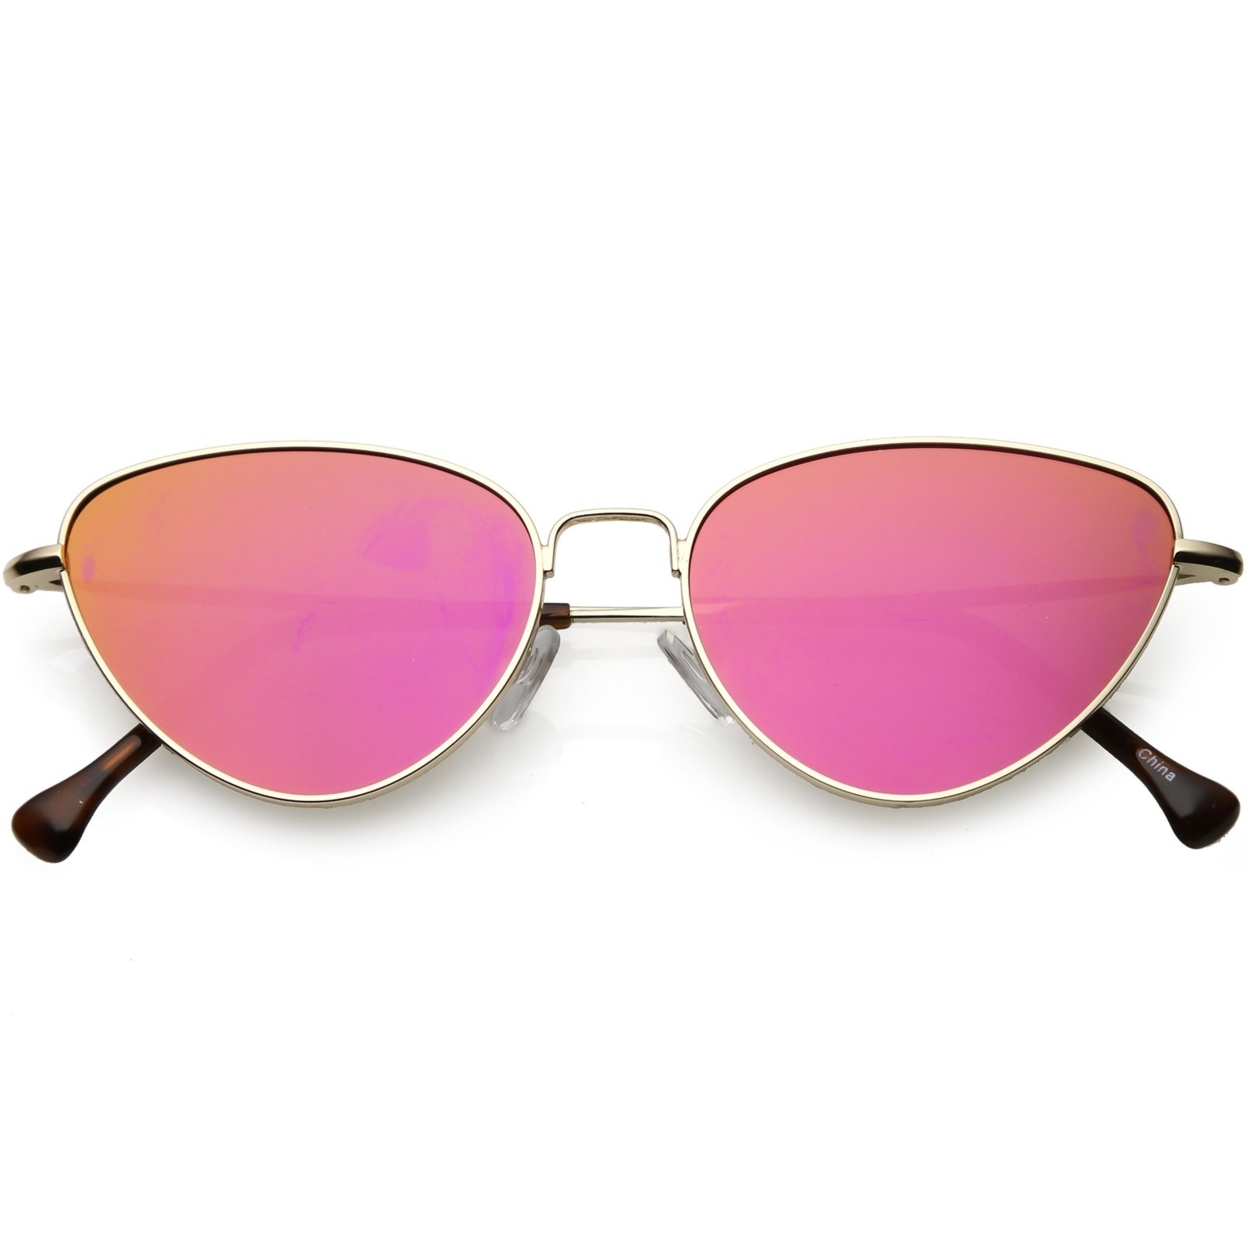 Women's Slim Metal Cat Eye Sunglasses Colored Mirror Flat Lens 54mm - Gold / Pink Mirror